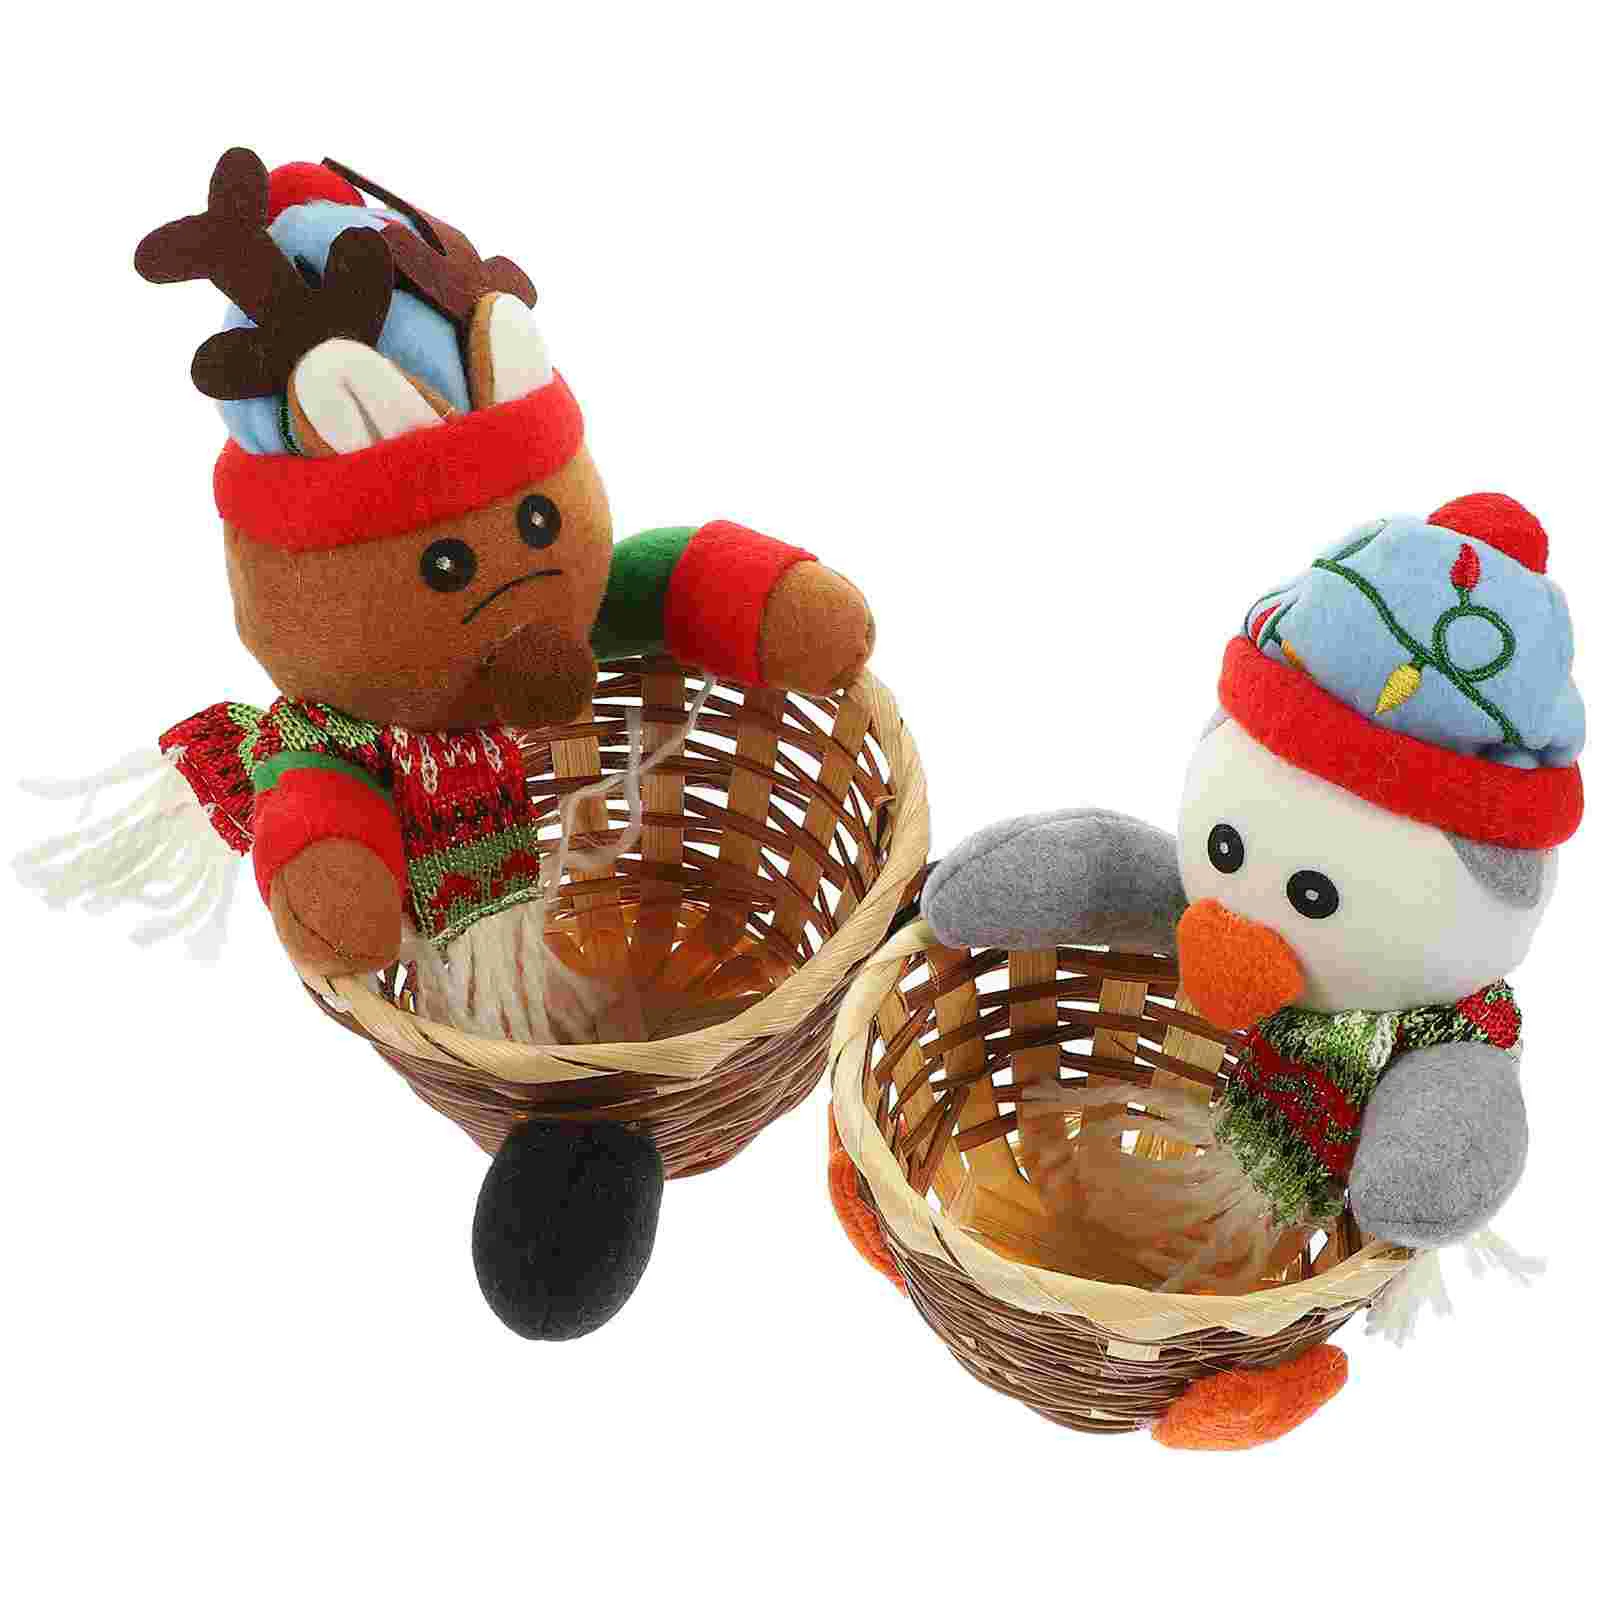 

Basket Candychristmas Holder Storage Woven Gift Rattan Serving Fruitdesktop Vegetable Organizer Sundries Treat Makeup Bowl